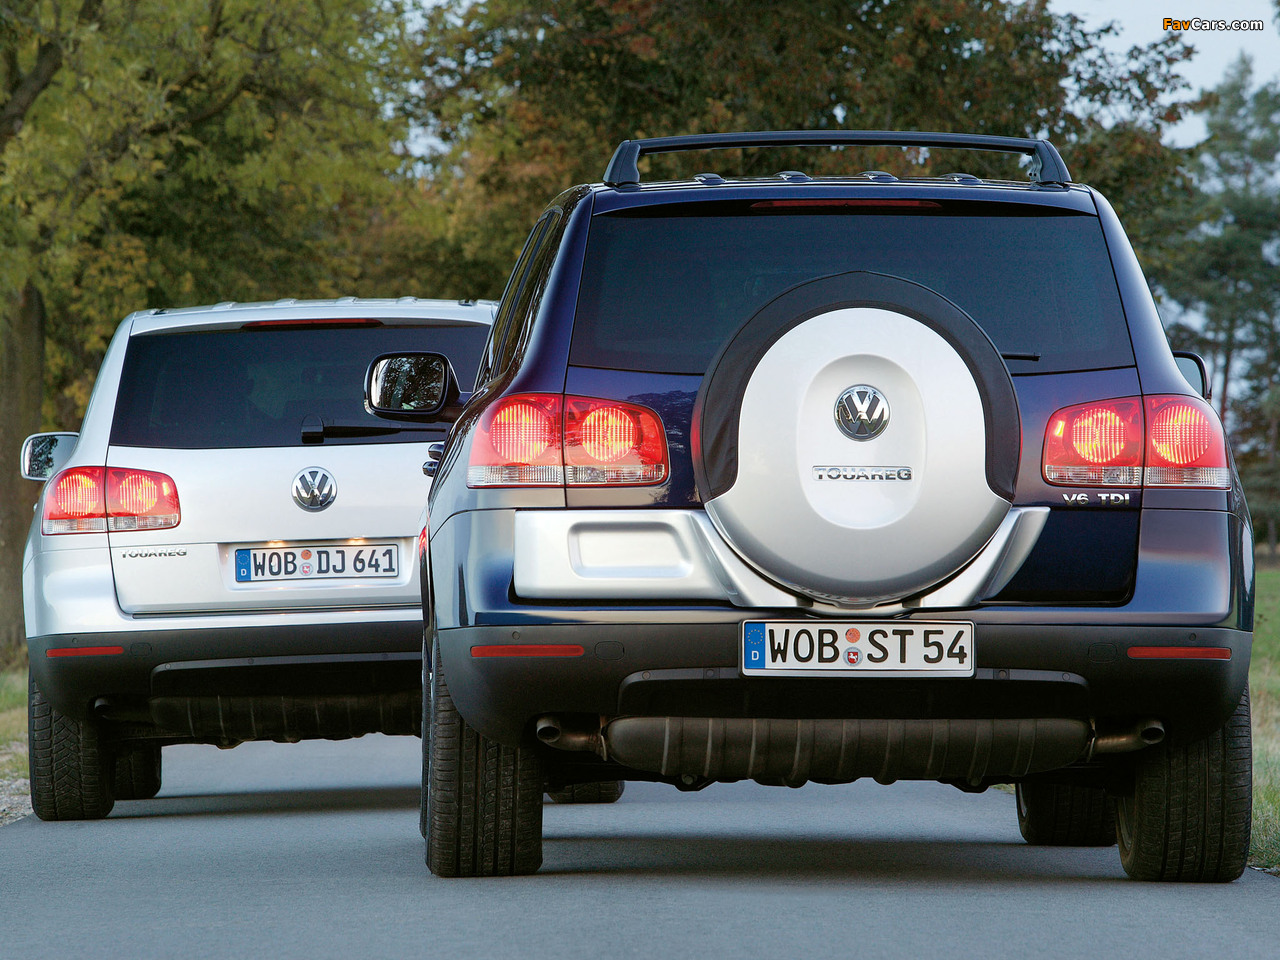 Volkswagen Touareg V6 TDI & V6 3.2 2003-06 images (1280 x 960)